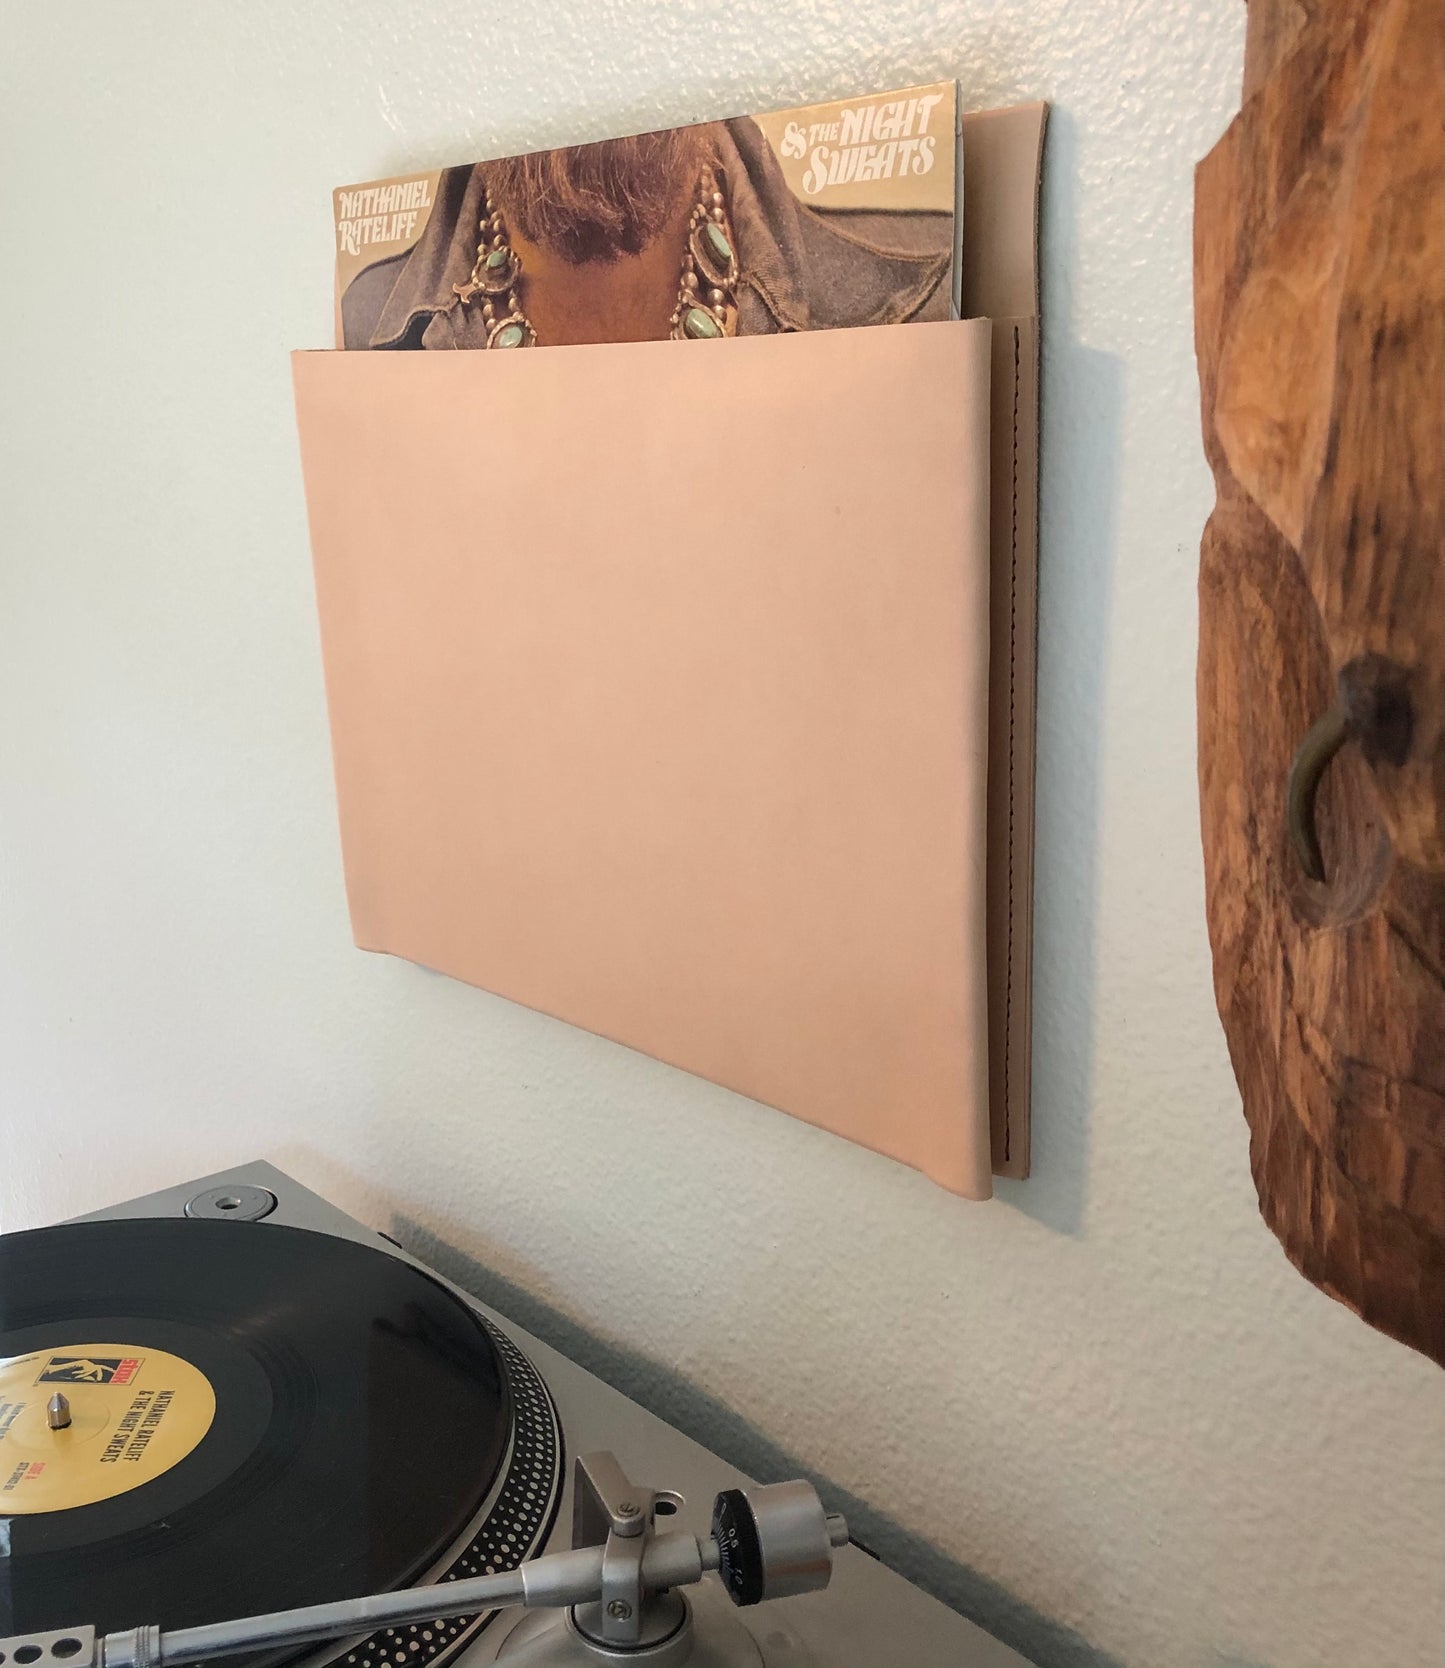 Minimal leather pocket holds vinyl record above turntable.